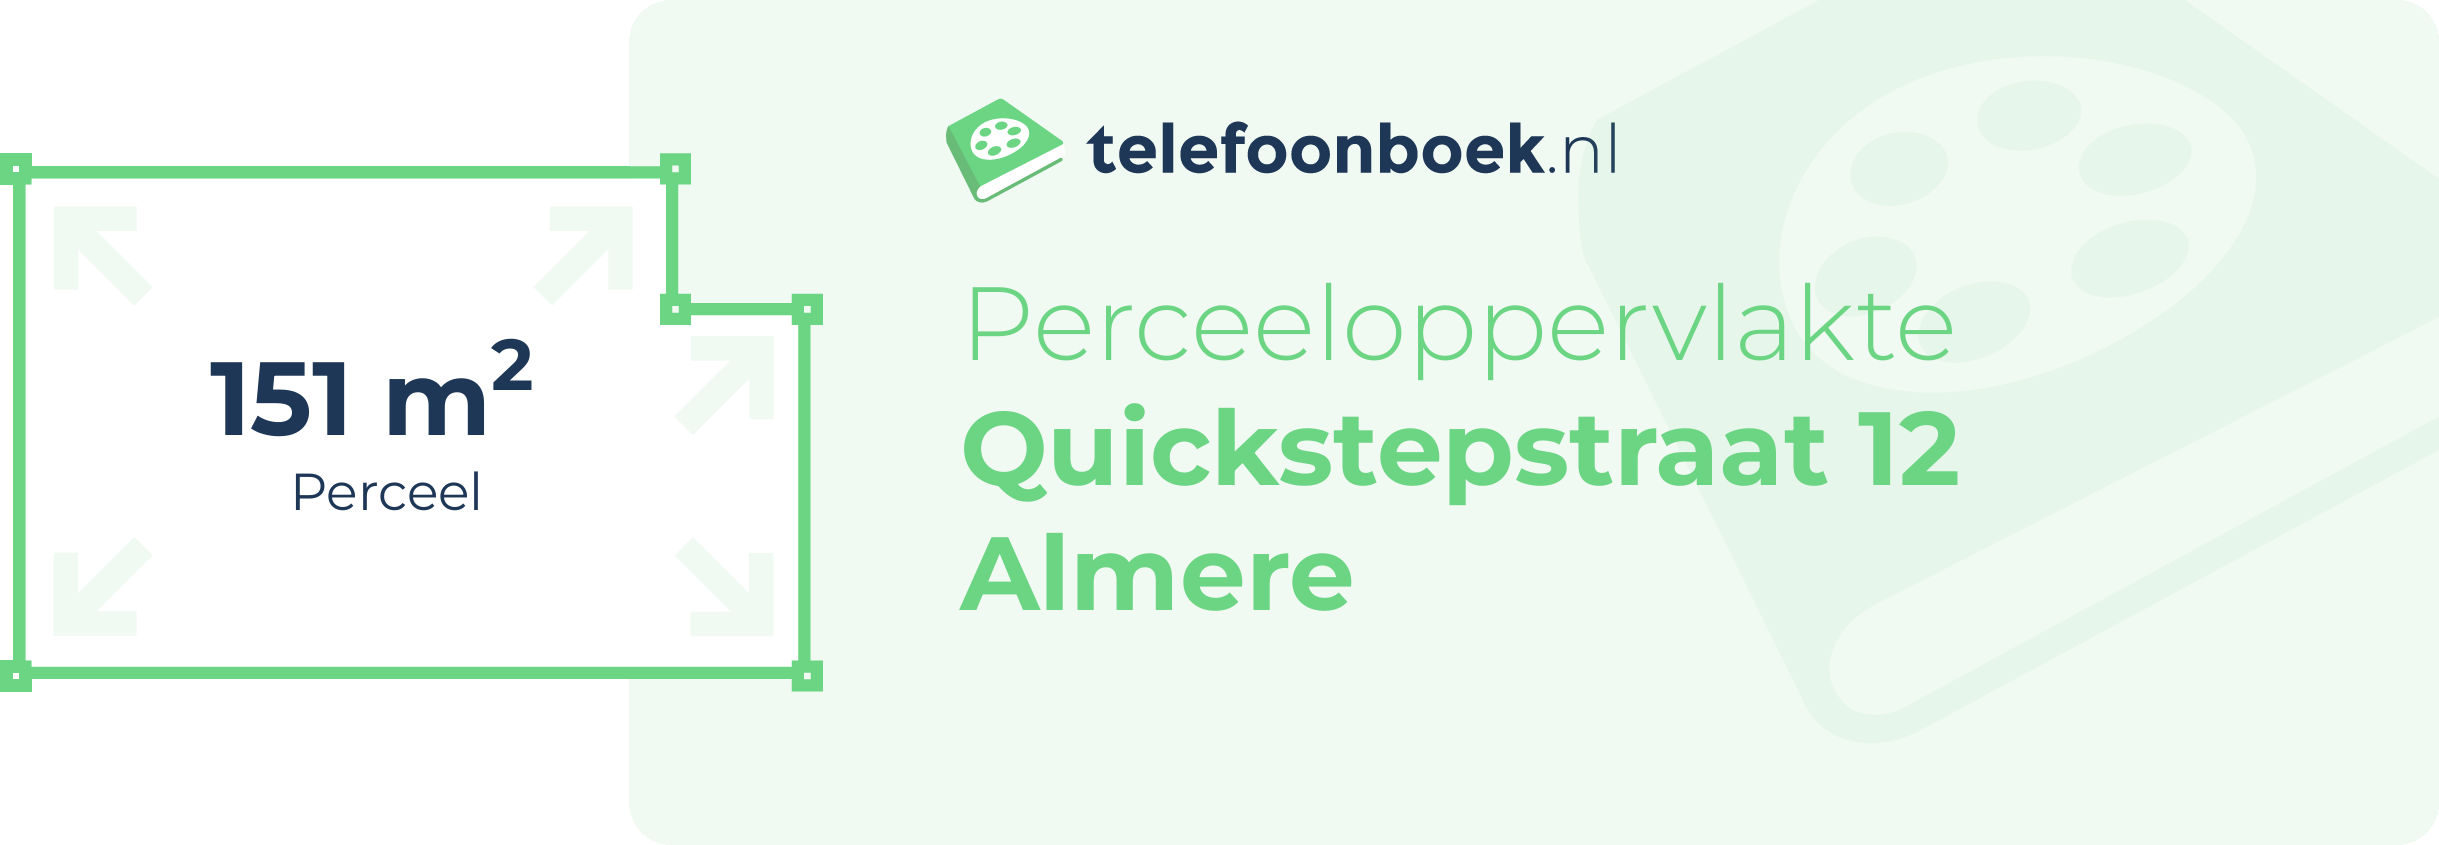 Perceeloppervlakte Quickstepstraat 12 Almere